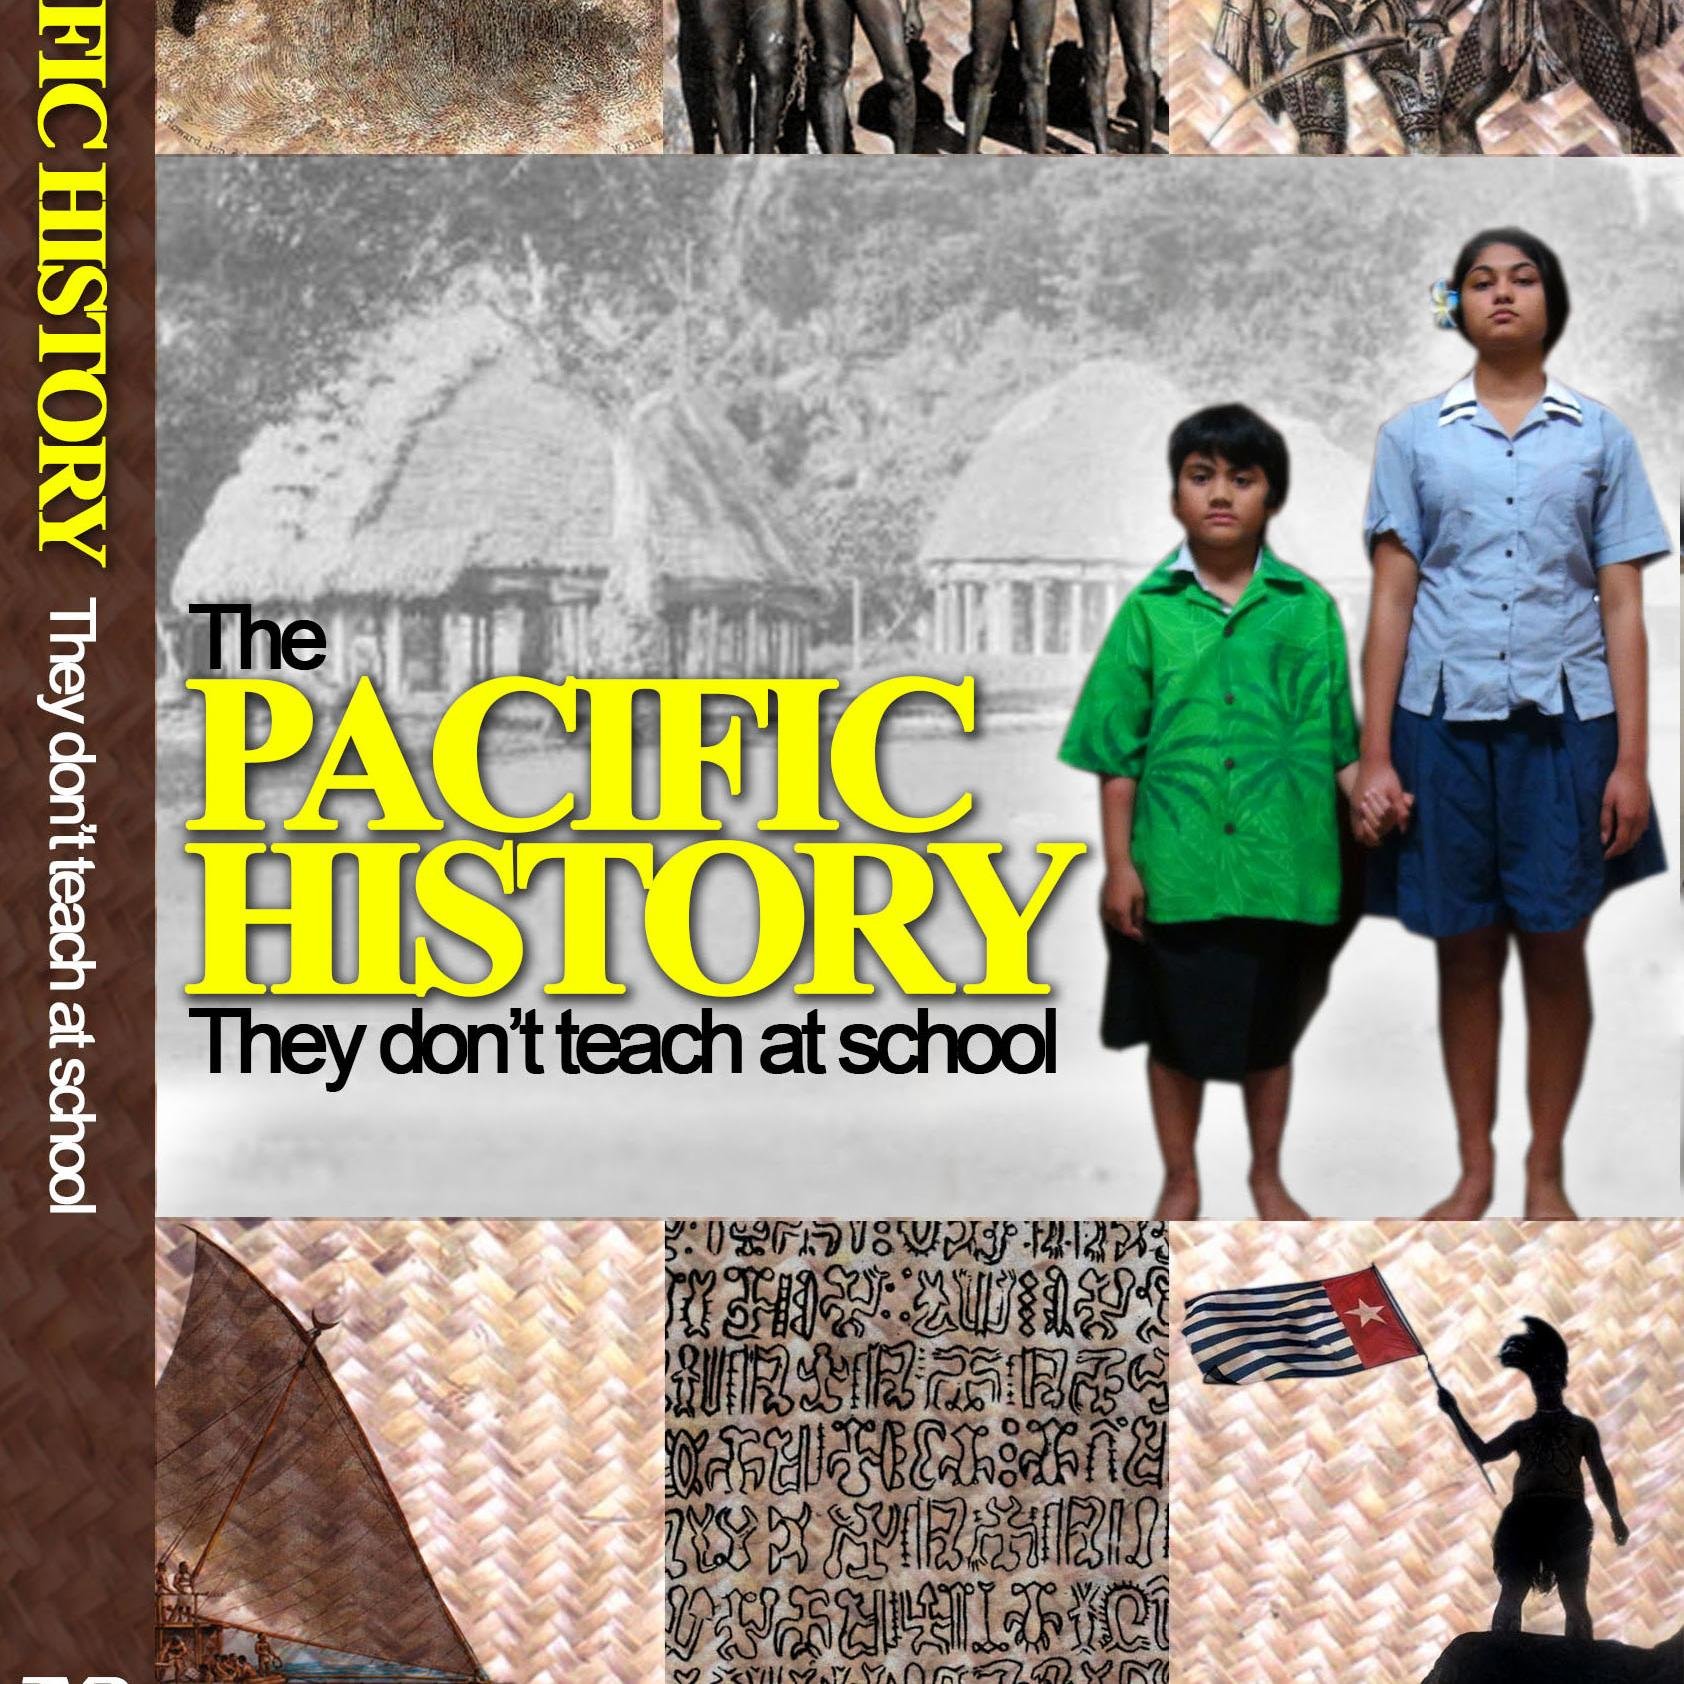 Purchase a DVD at https://t.co/Cn3ZI4YVPv - EveryoneForSamoa - The Pacific History - Blackbirding Productions Ltd (NZ)